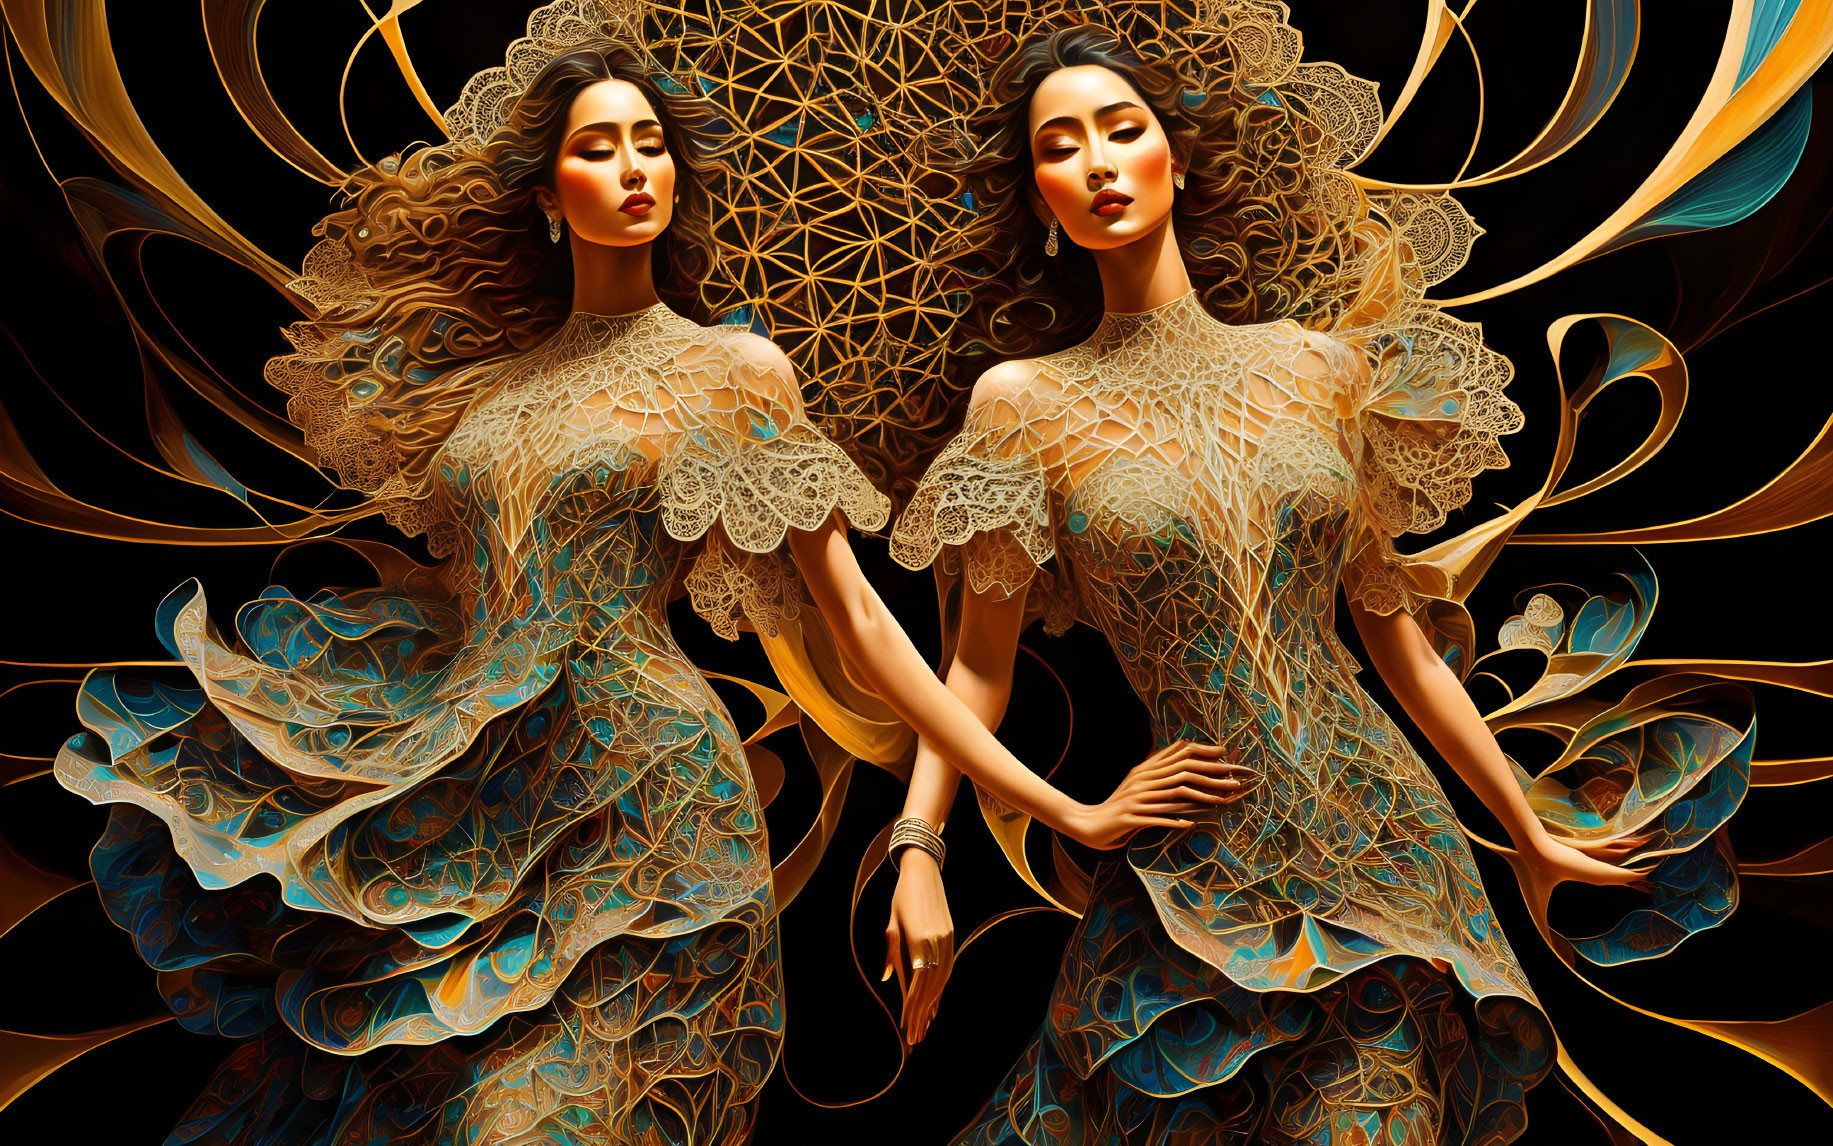 Elaborate twin women digital art in golden dresses